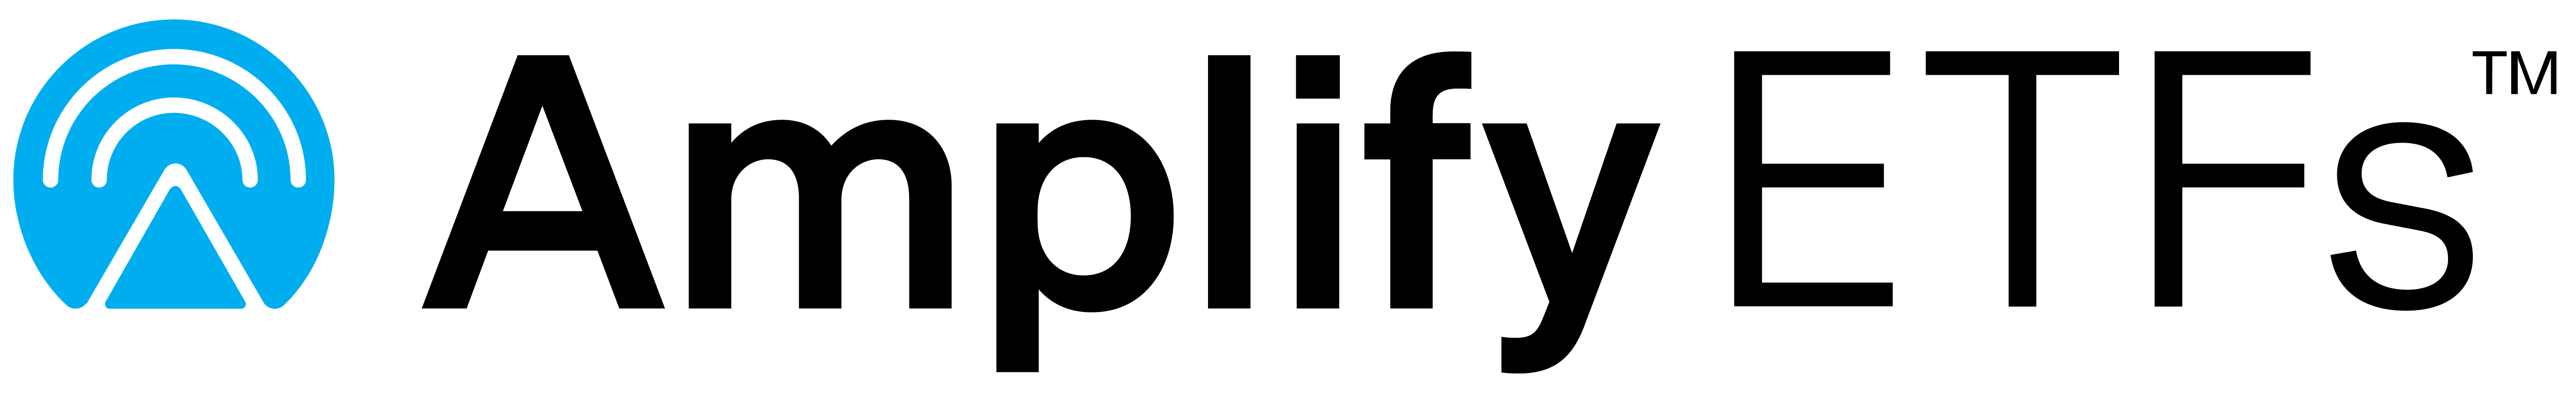 Amplify ETFs Named Finalist for ETF.com Awards